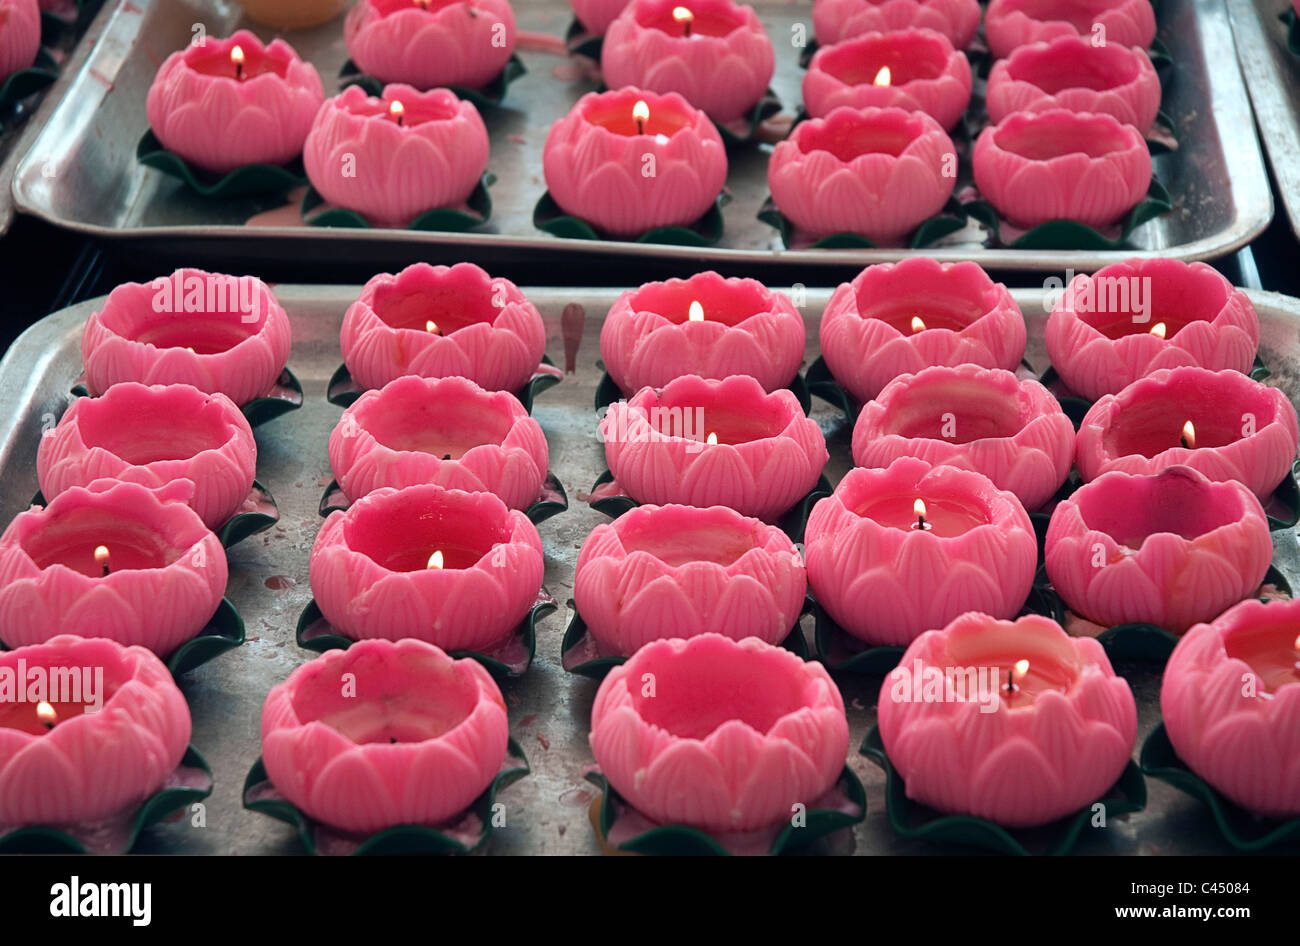 Malaysia, Kuala Lumpur, Thean Hou Temple, pink lotus-shaped candles on trays, close-up Stock Photo